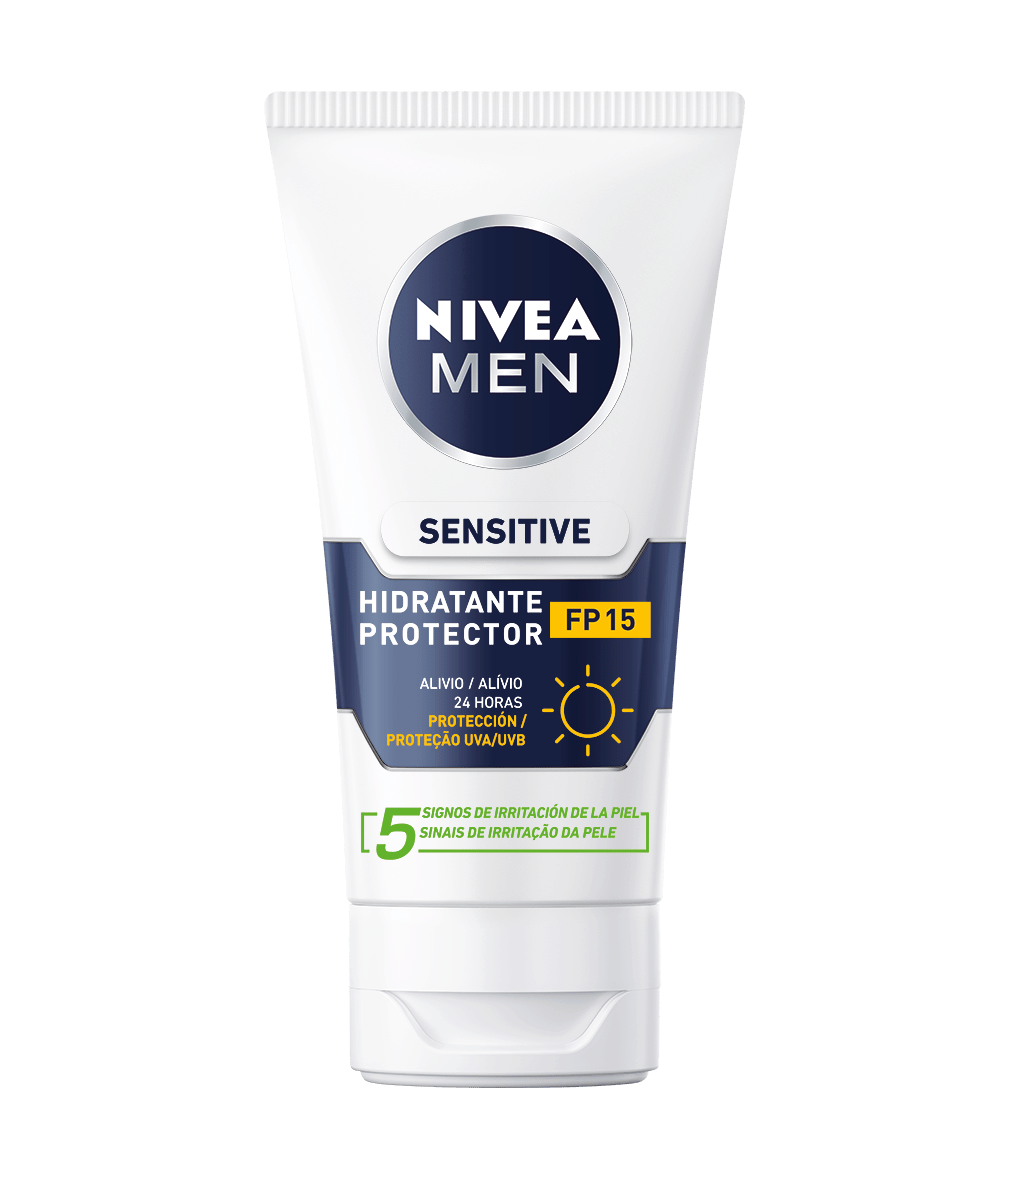 NIVEA MEN Sensitive Hidratante Protector FP 15